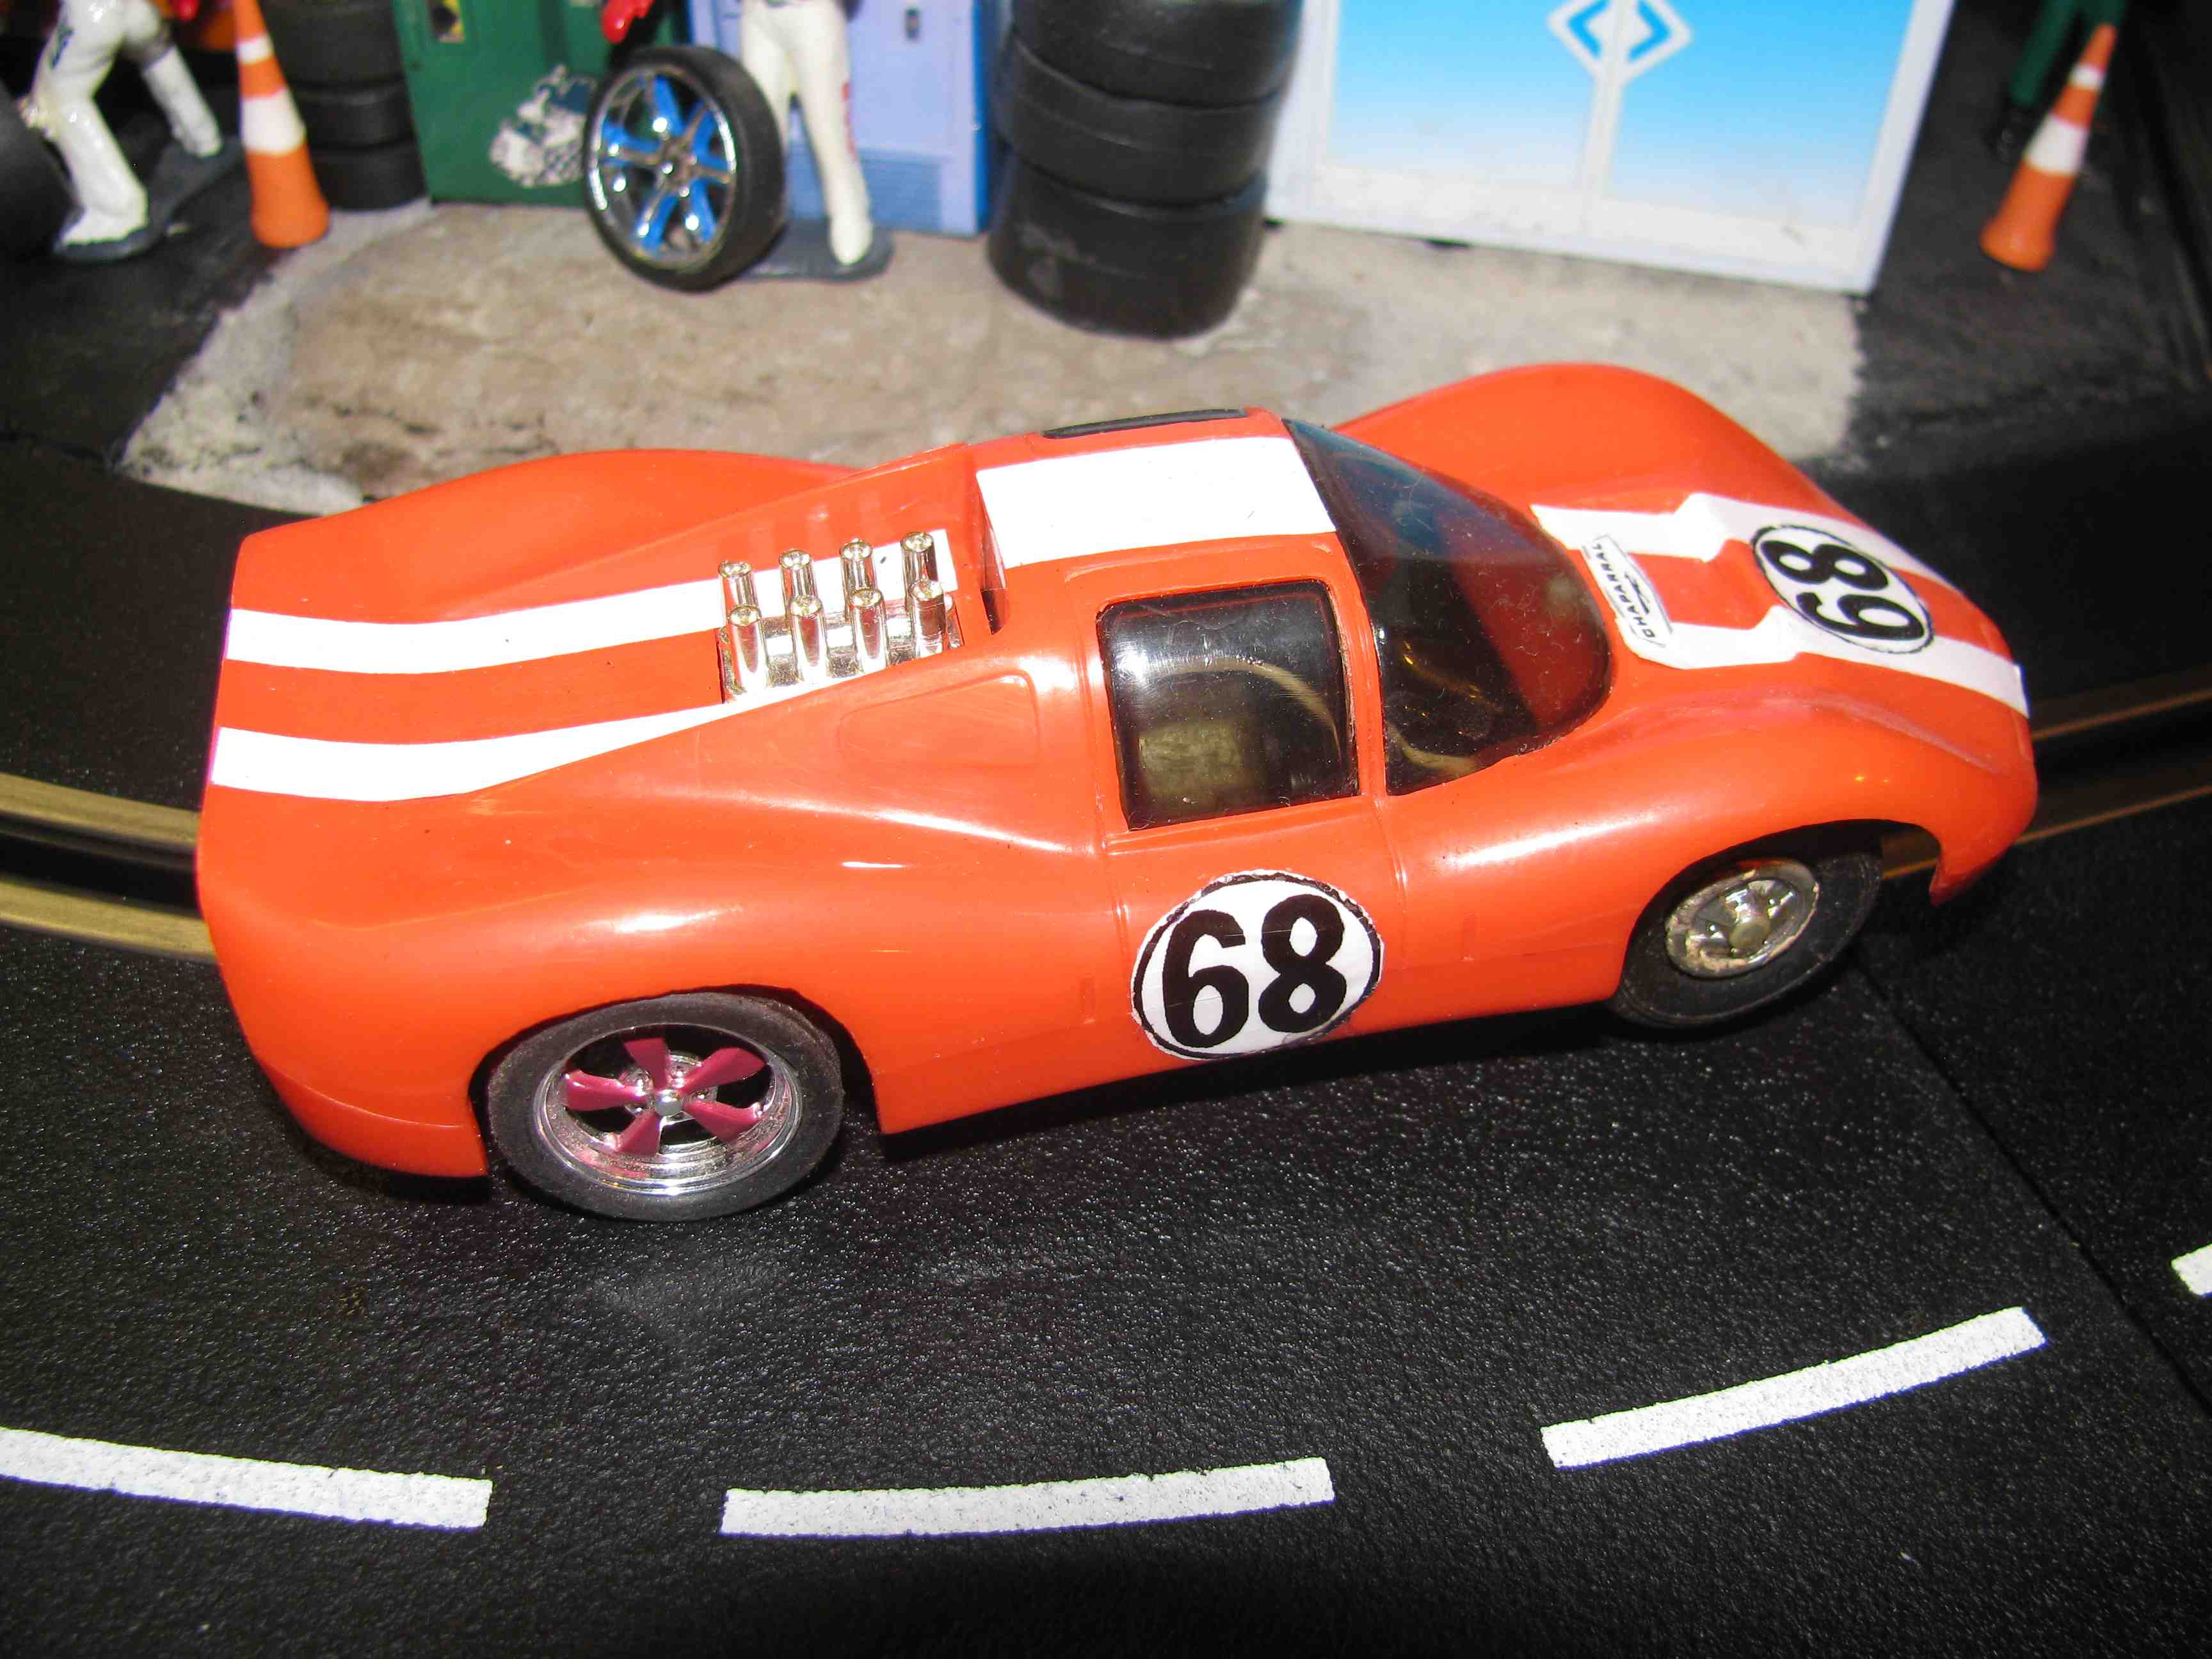 * SOLD * Eldon Chaparral Slot Car – Orange – Body #1350-11 - Car#68 – 1/32 Scale